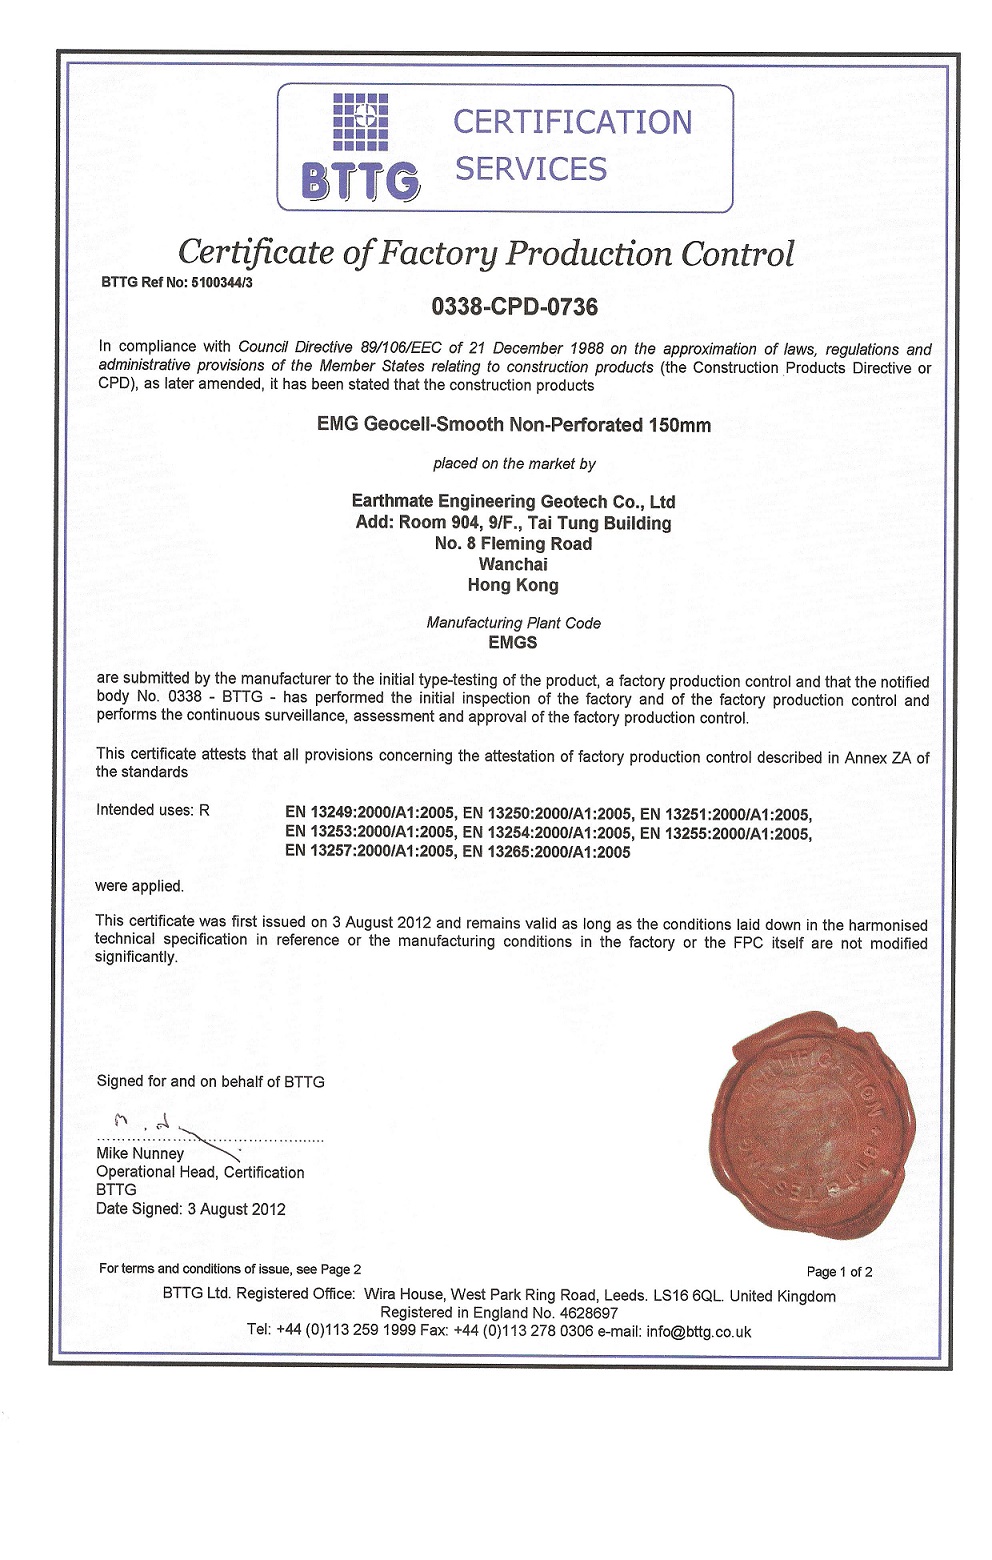 WALLSTRAIN HDPE Geocell CE Certificate of Conformity|BTTG, U.K